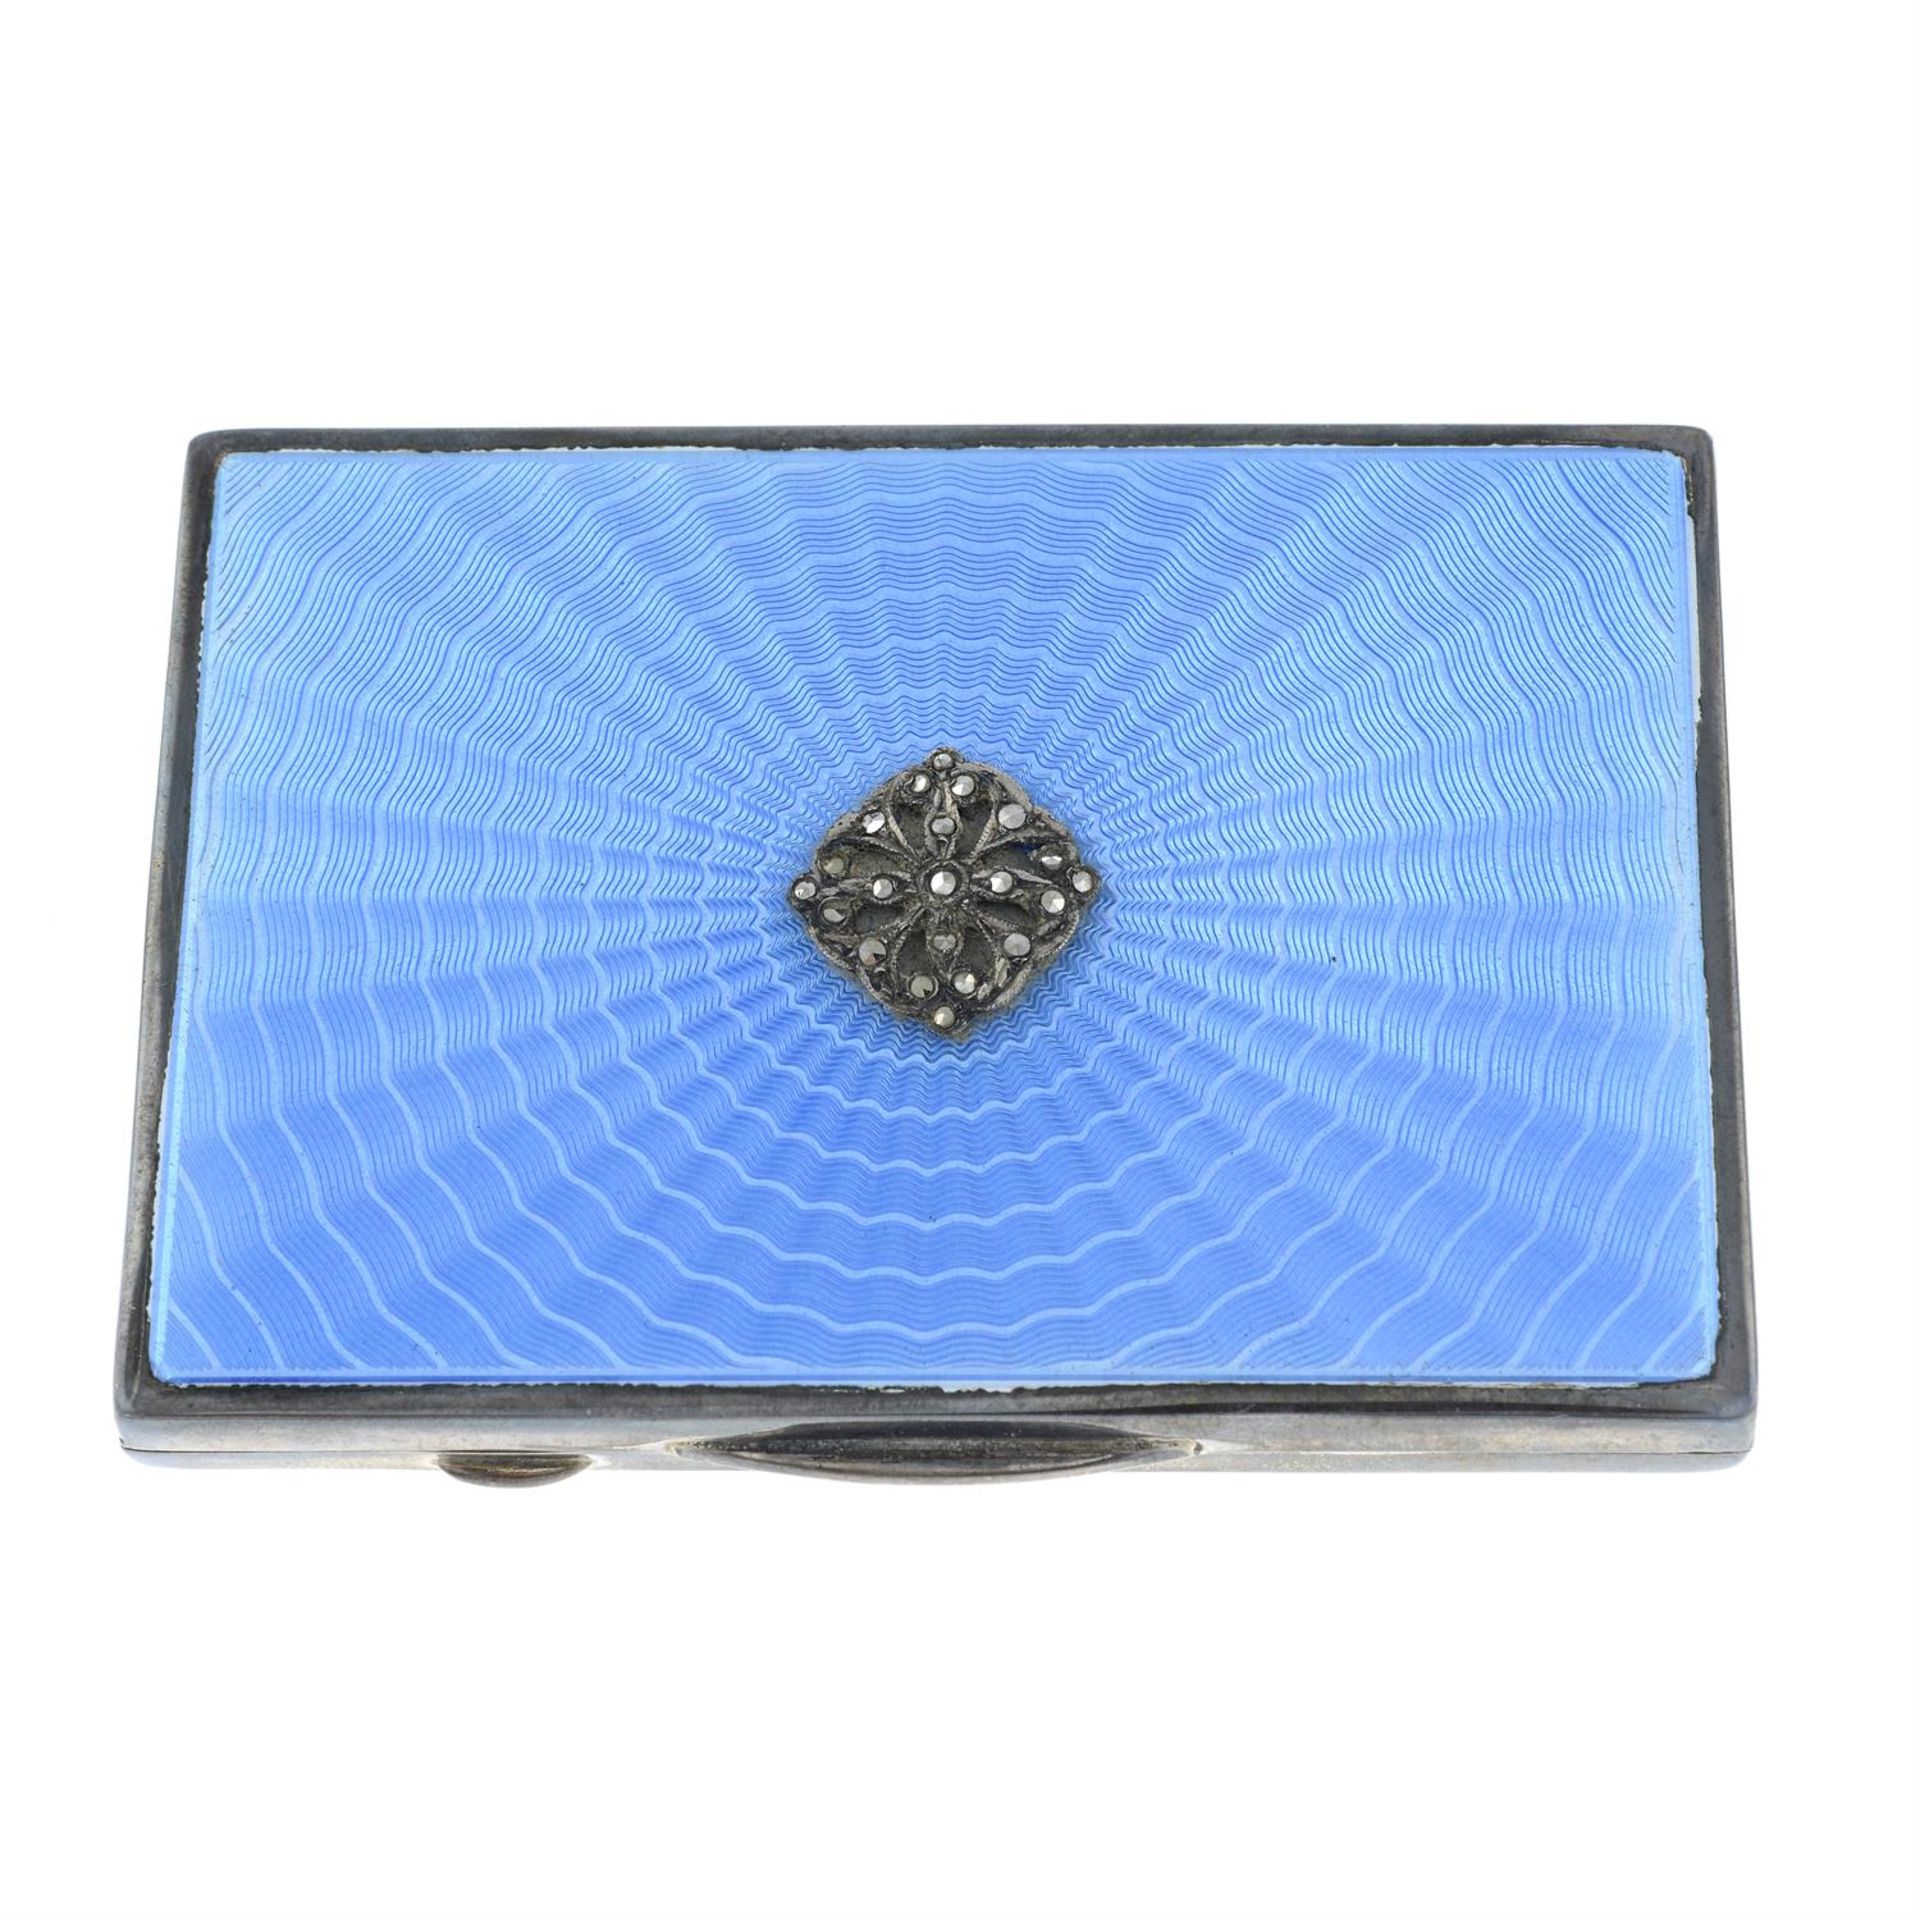 An early 20th century silver blue guilloche enamel powder compact, by Deakin & Francis.